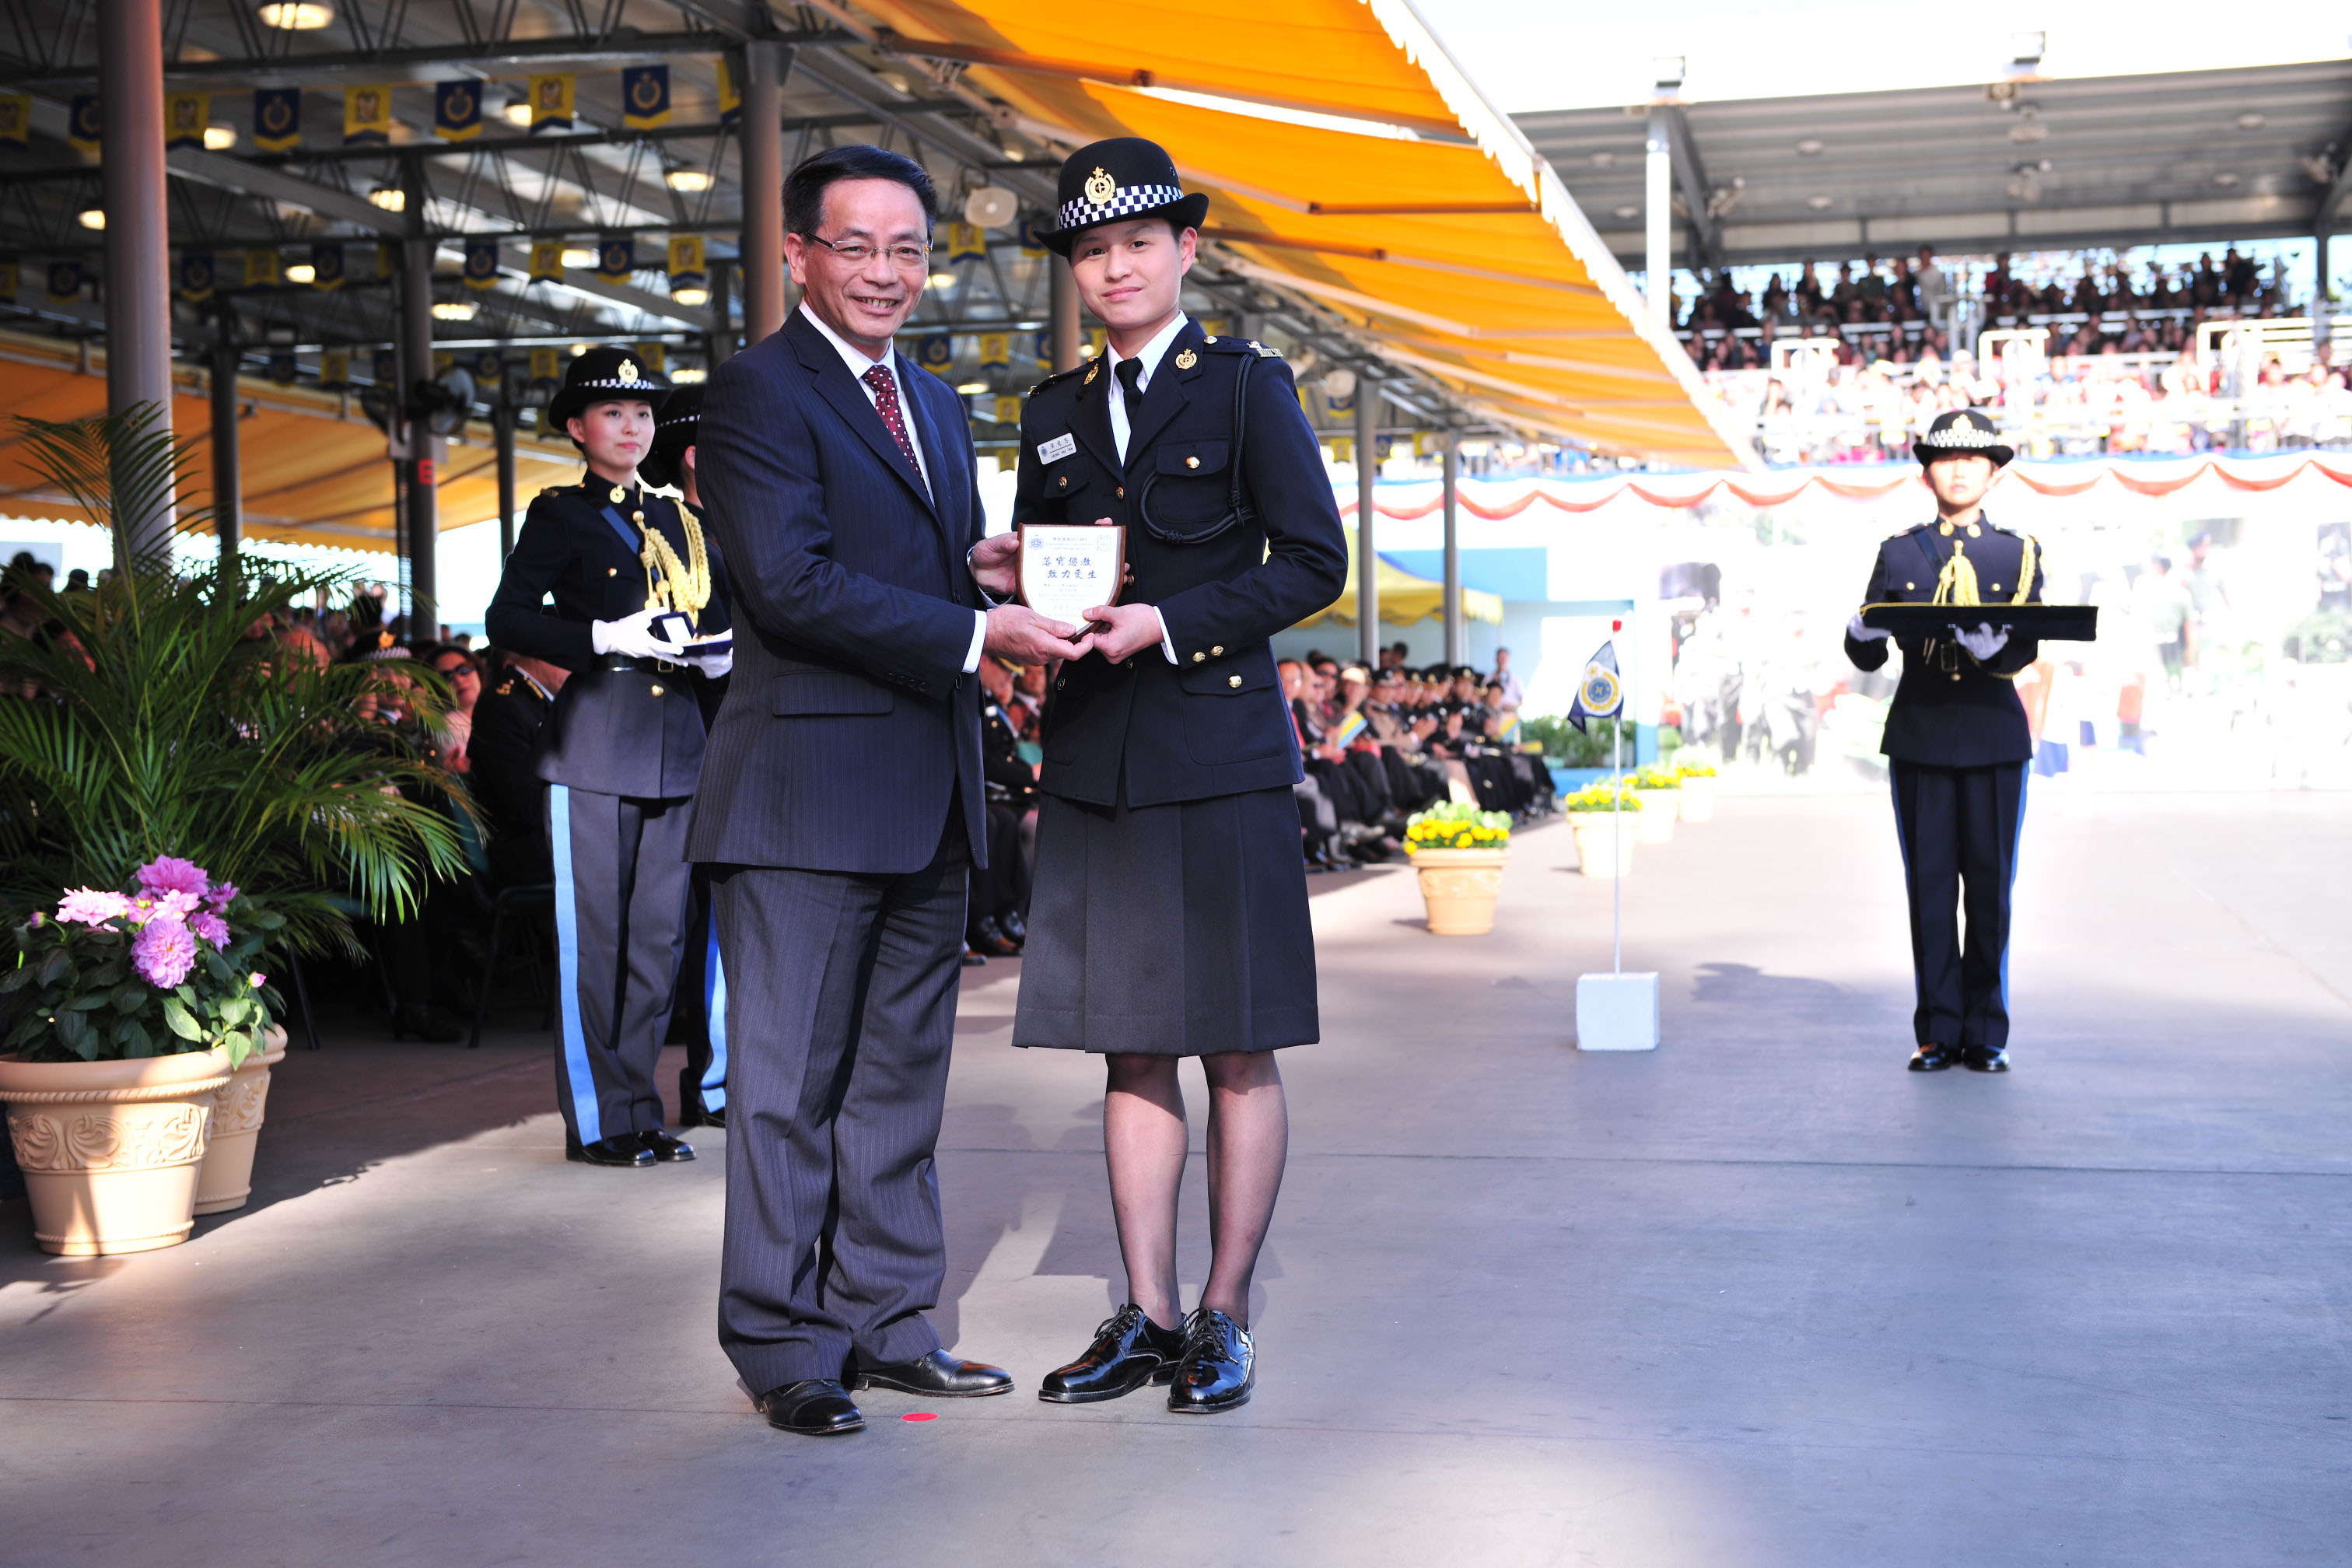 Mr Ip presents the Best Recruit Award, the Principal's Shield, to Officer Leung Hiu-yan.